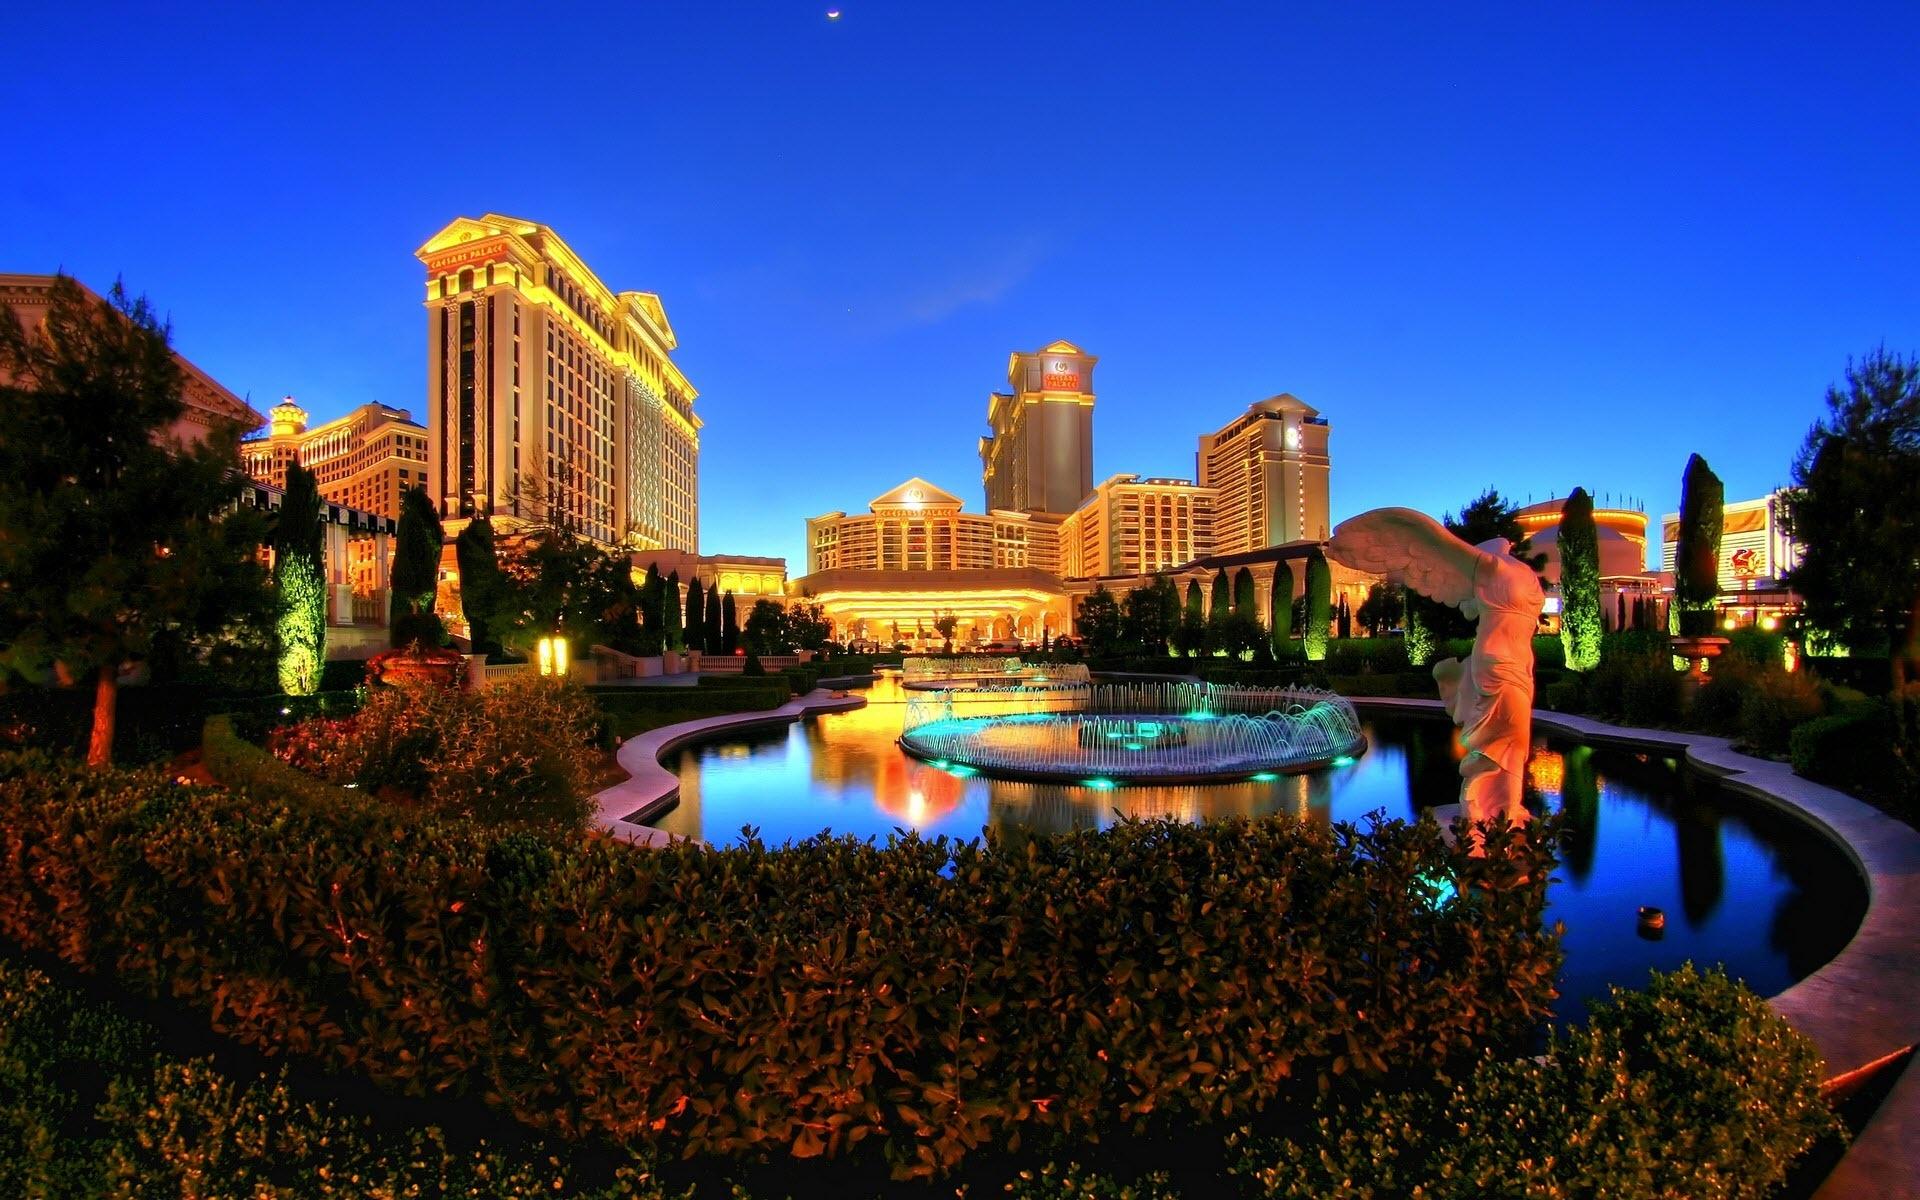 Caesars Palace Las Vegas Hotel & Casino Wallpapers in jpg format for